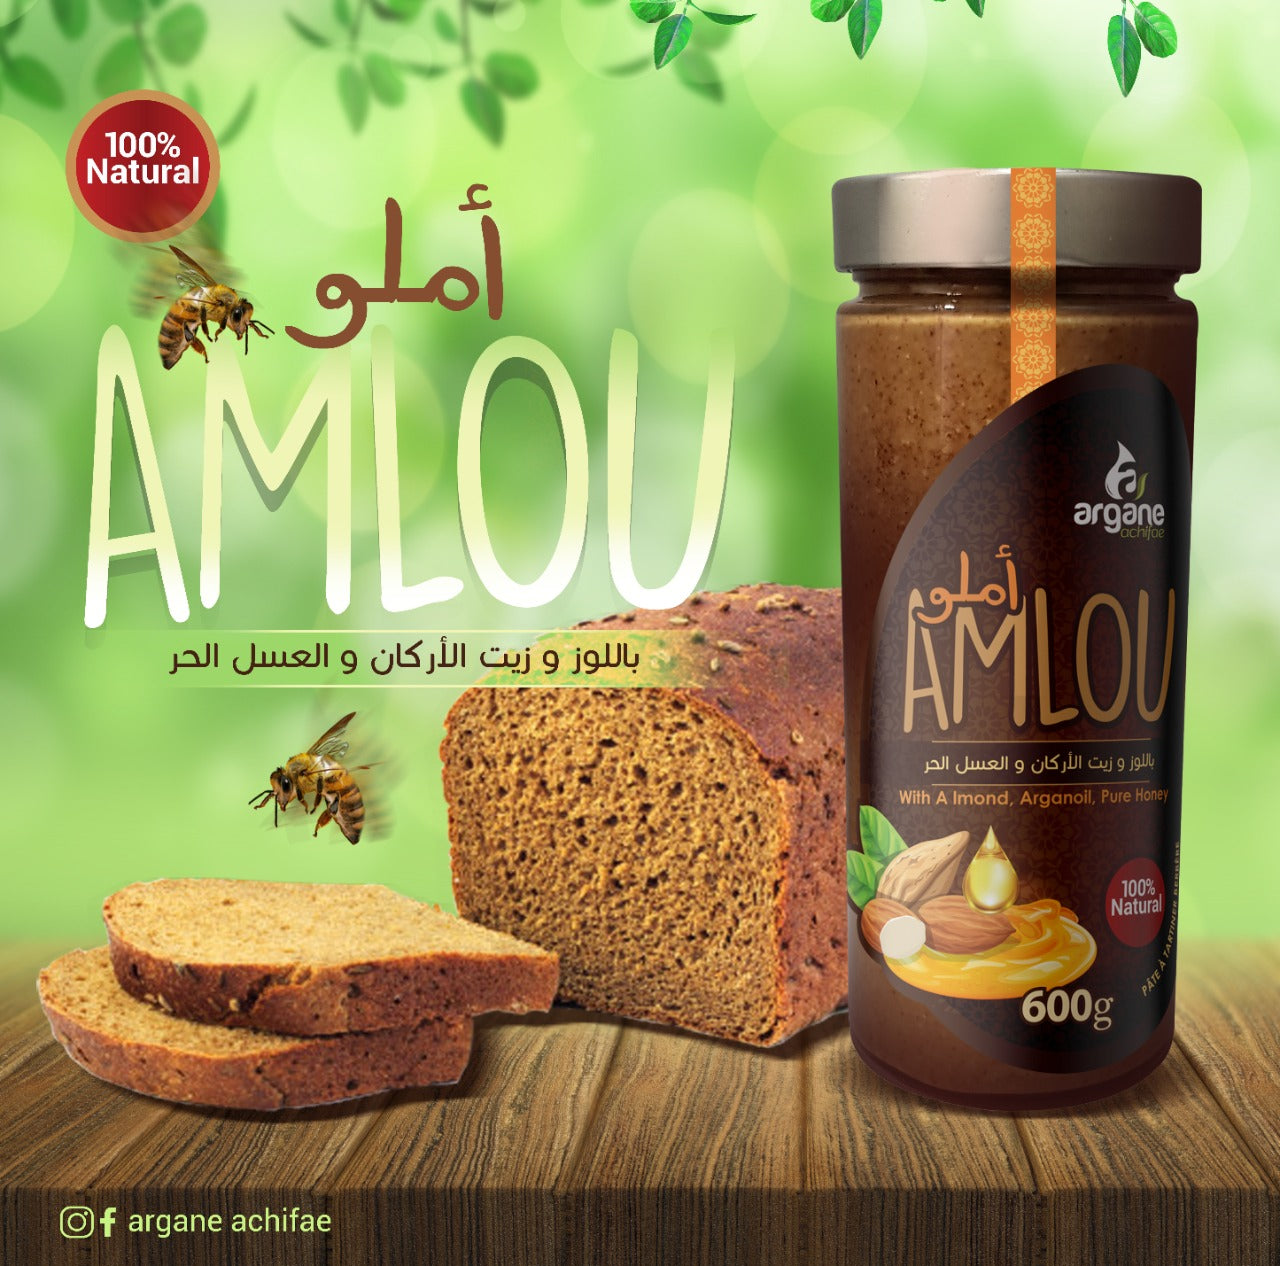 Berber Morocan Amlou with Sweet Almond and Organic USDA Argan Oil